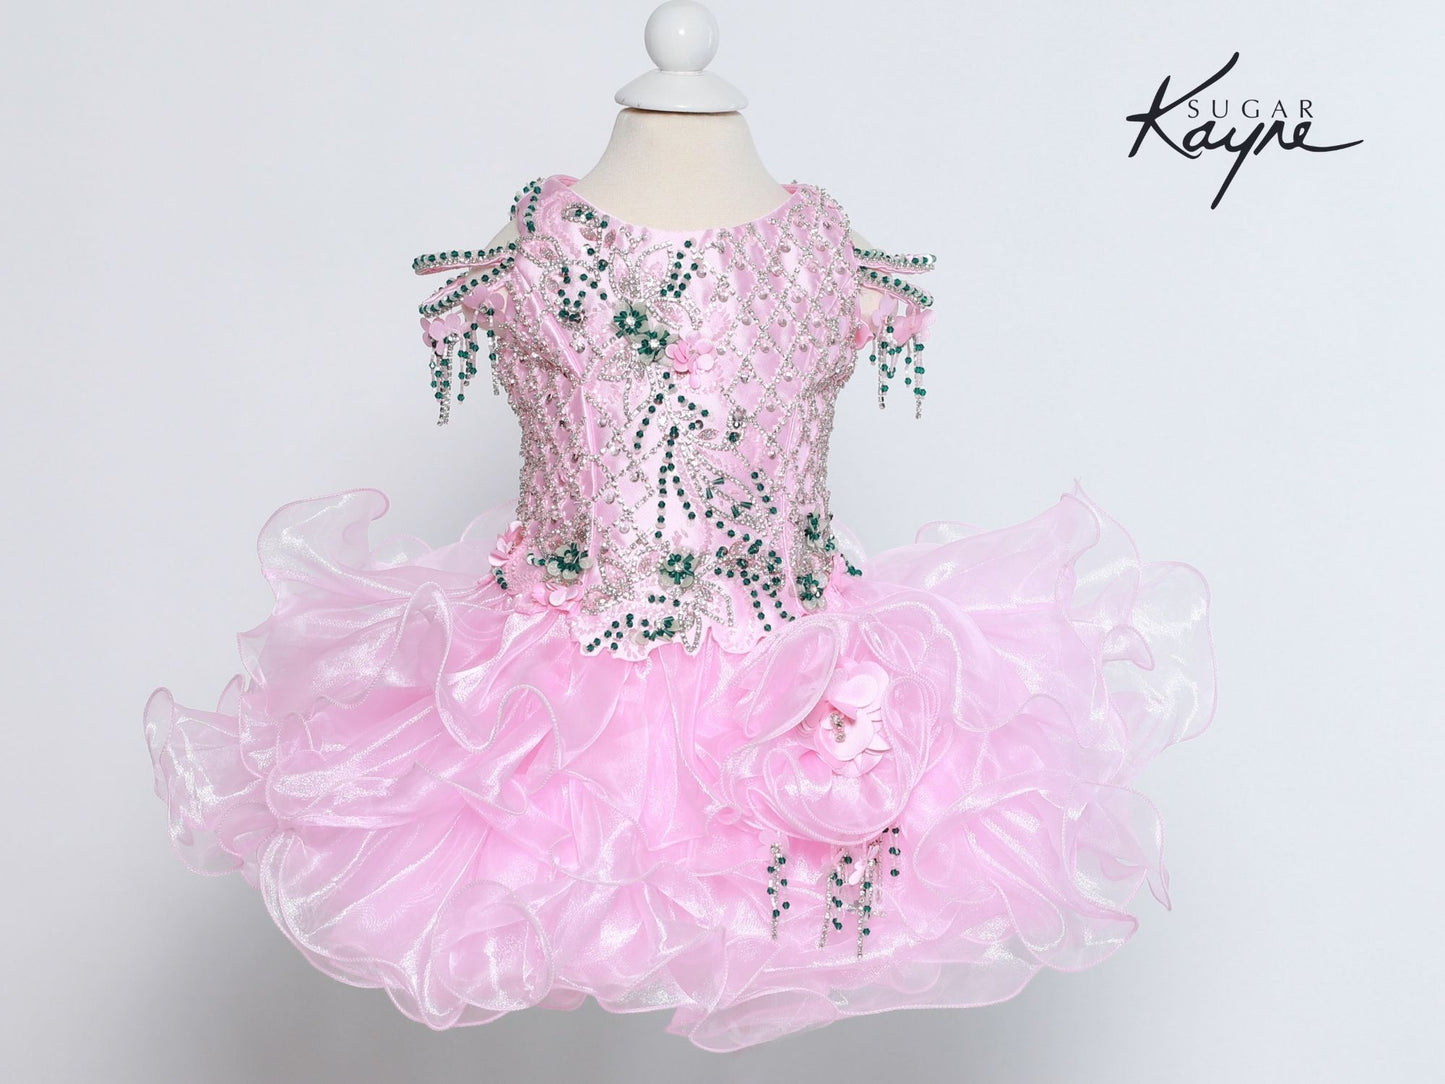 Sugar Kayne C205 Short Ruffle Girls Cupcake Pageant Dress Off the shoulder beaded fringe  Sizes: 0M, 6M, 12M, 18M, 24M, 2T, 3T, 4T, 5T, 6T  Colors: Petal Pink, Emerald, White